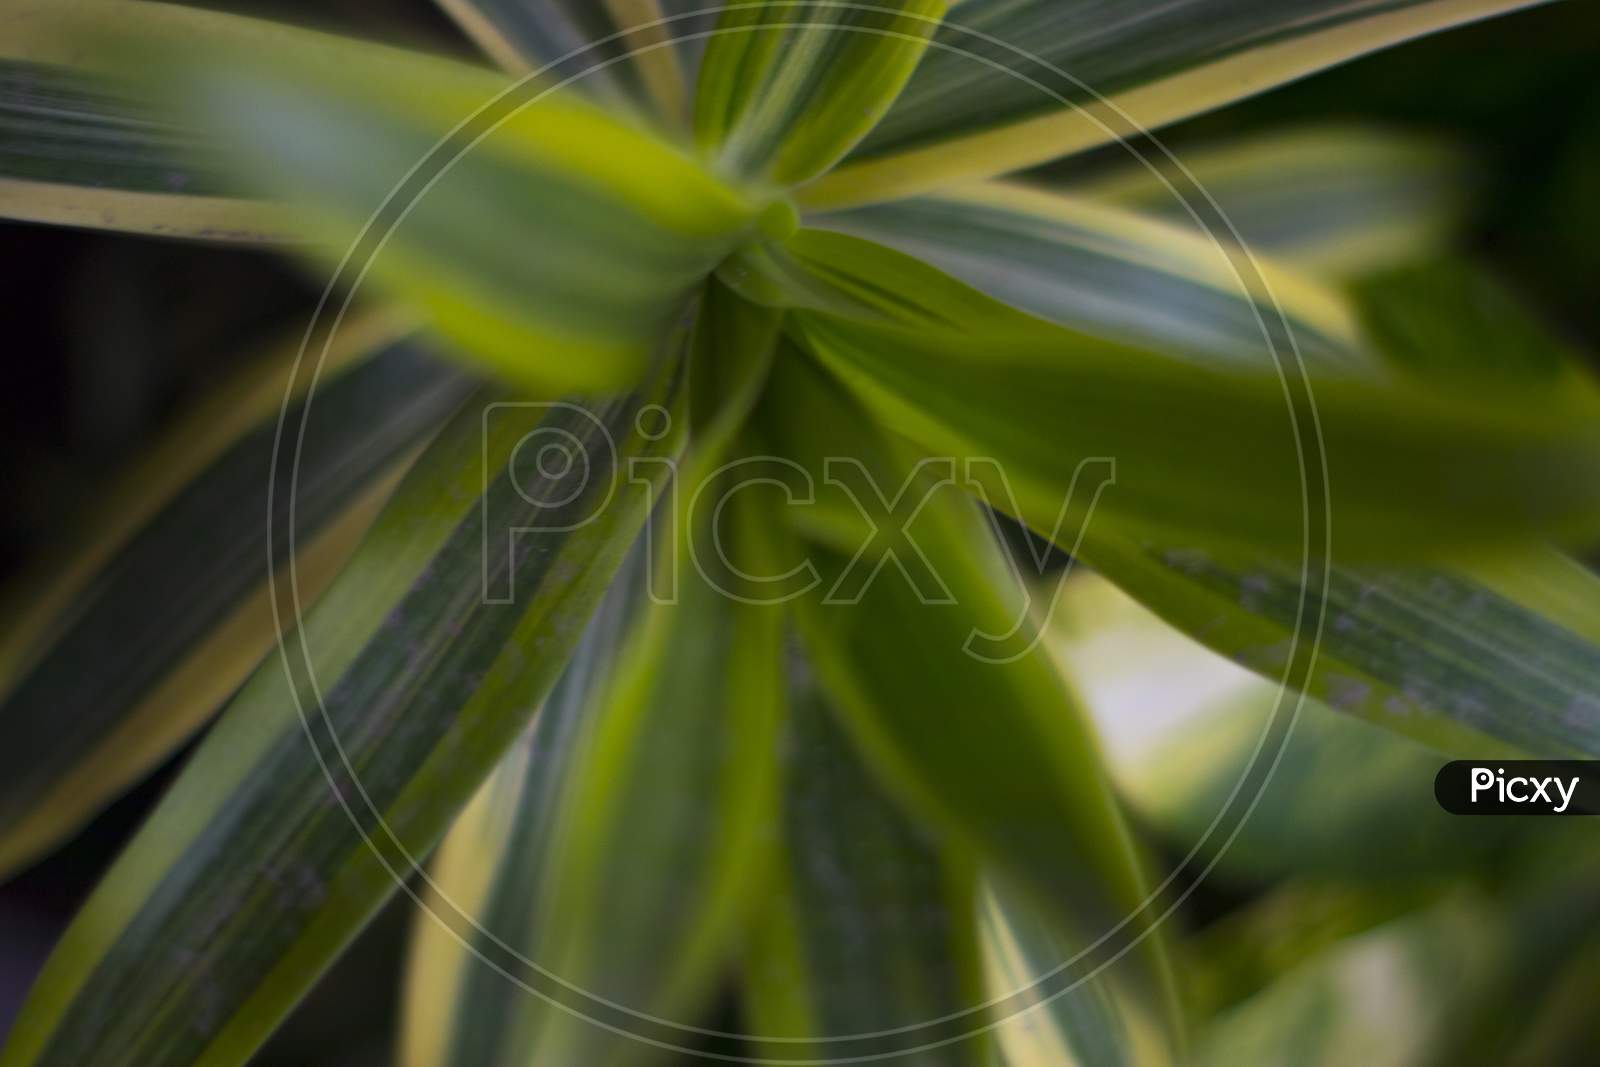 Plant closeup